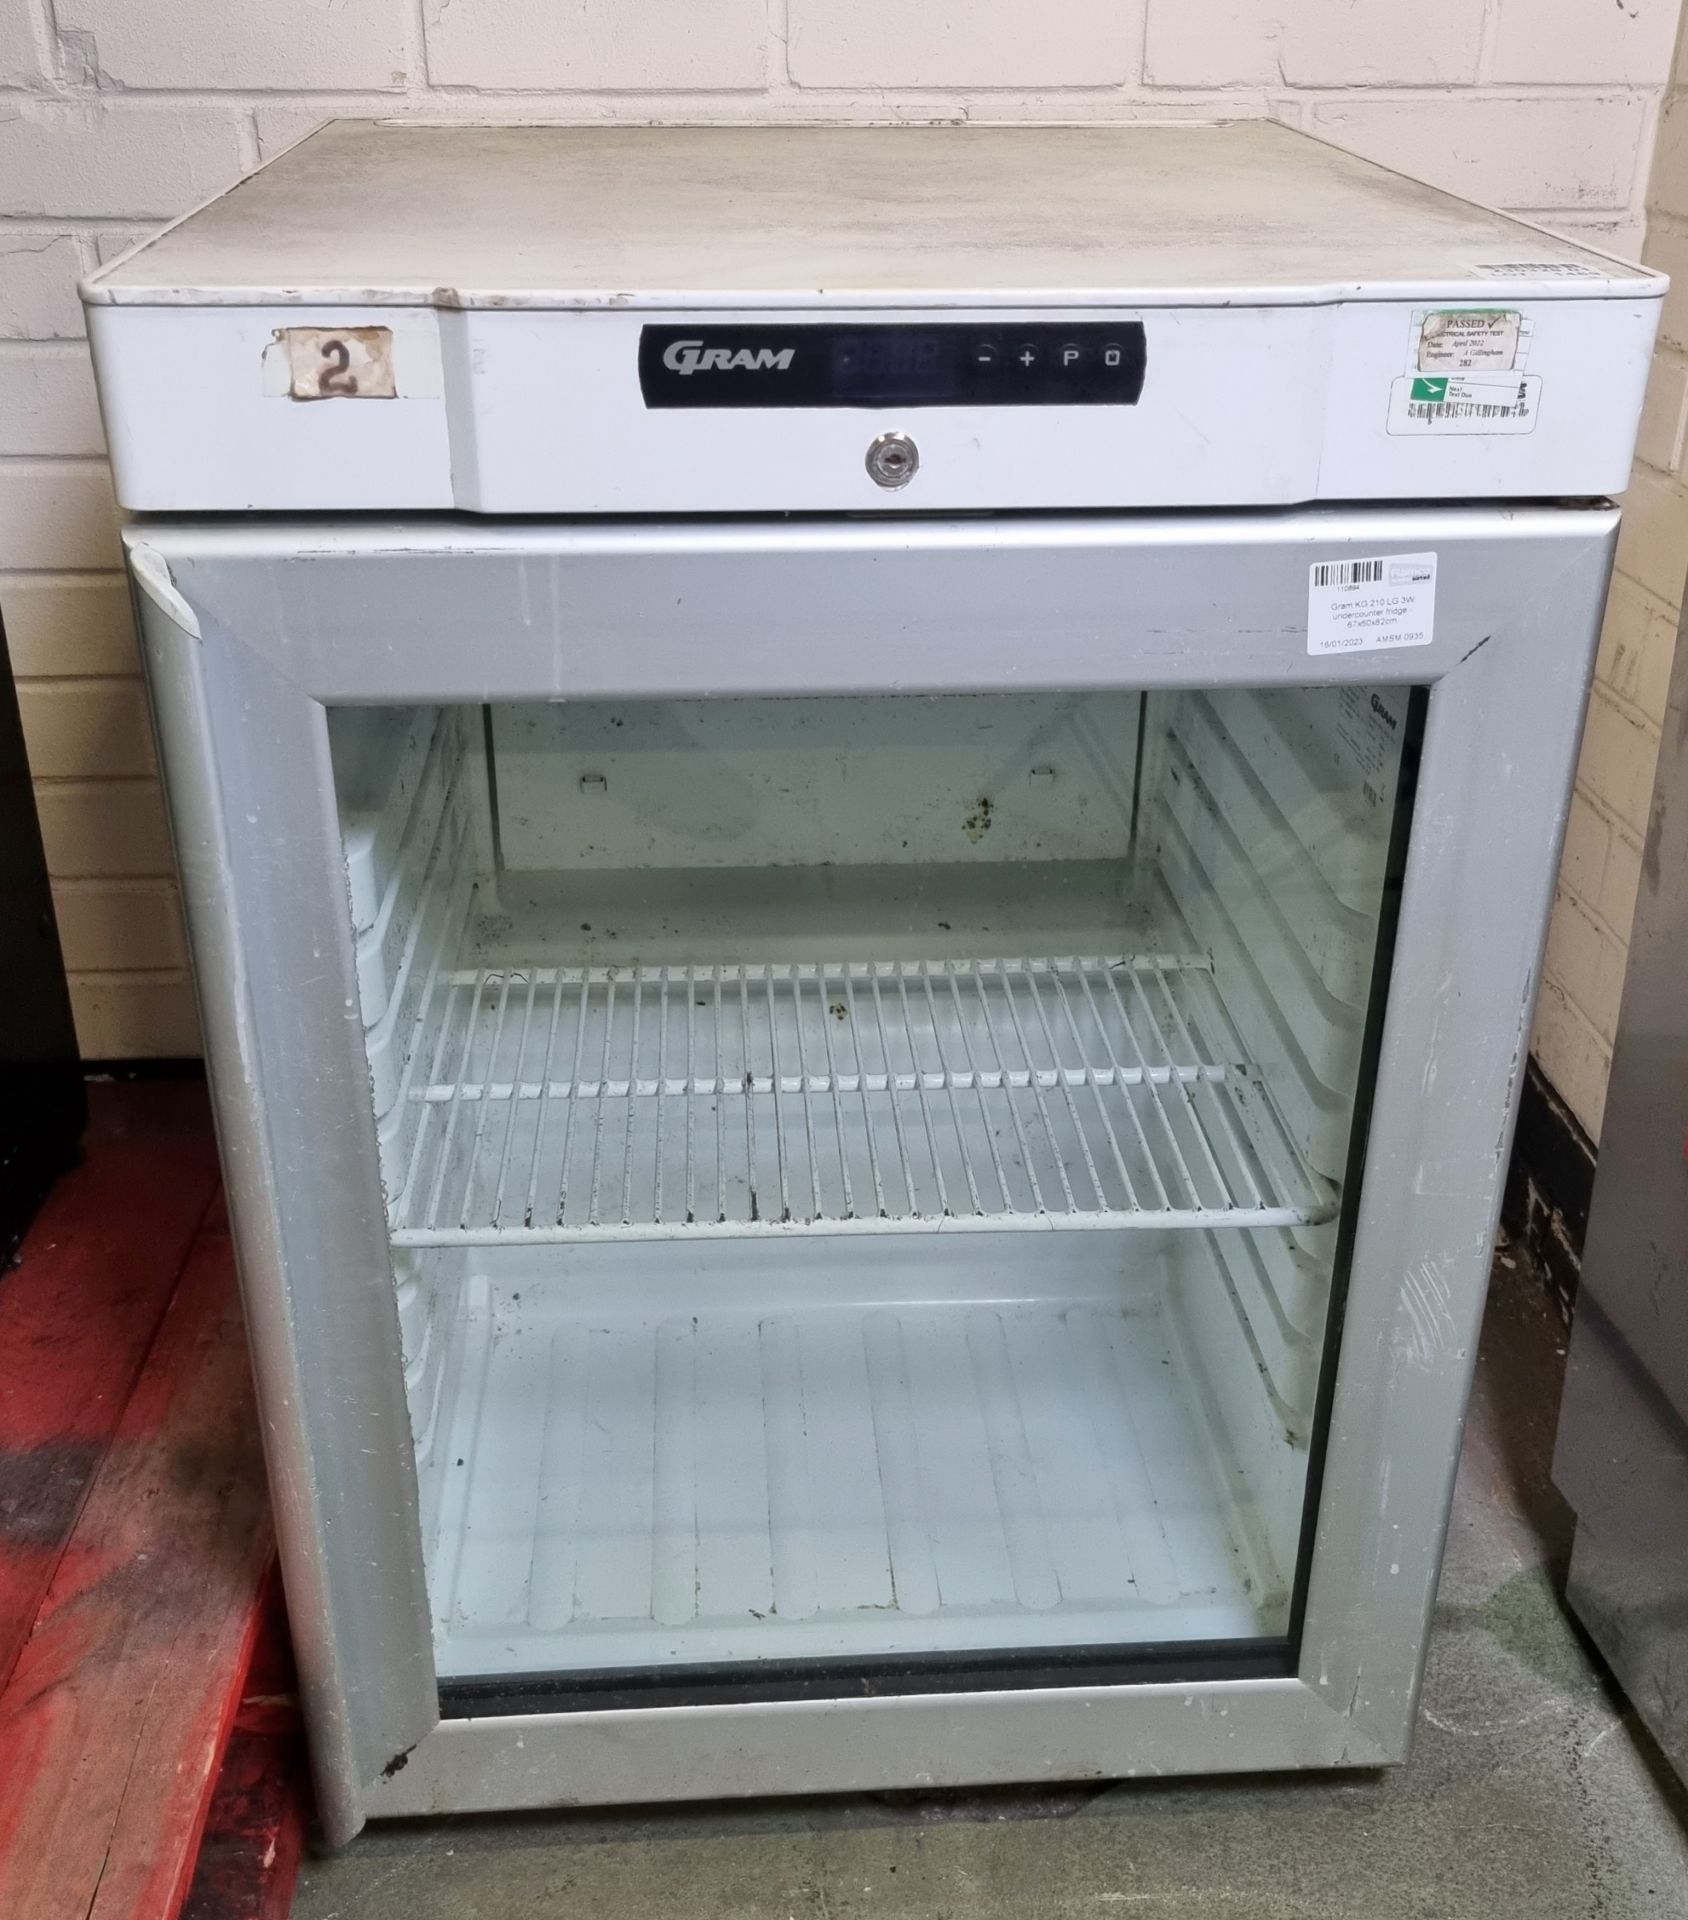 Gram KG 210 LG 3W undercounter fridge - 67 x 60 x 82cm